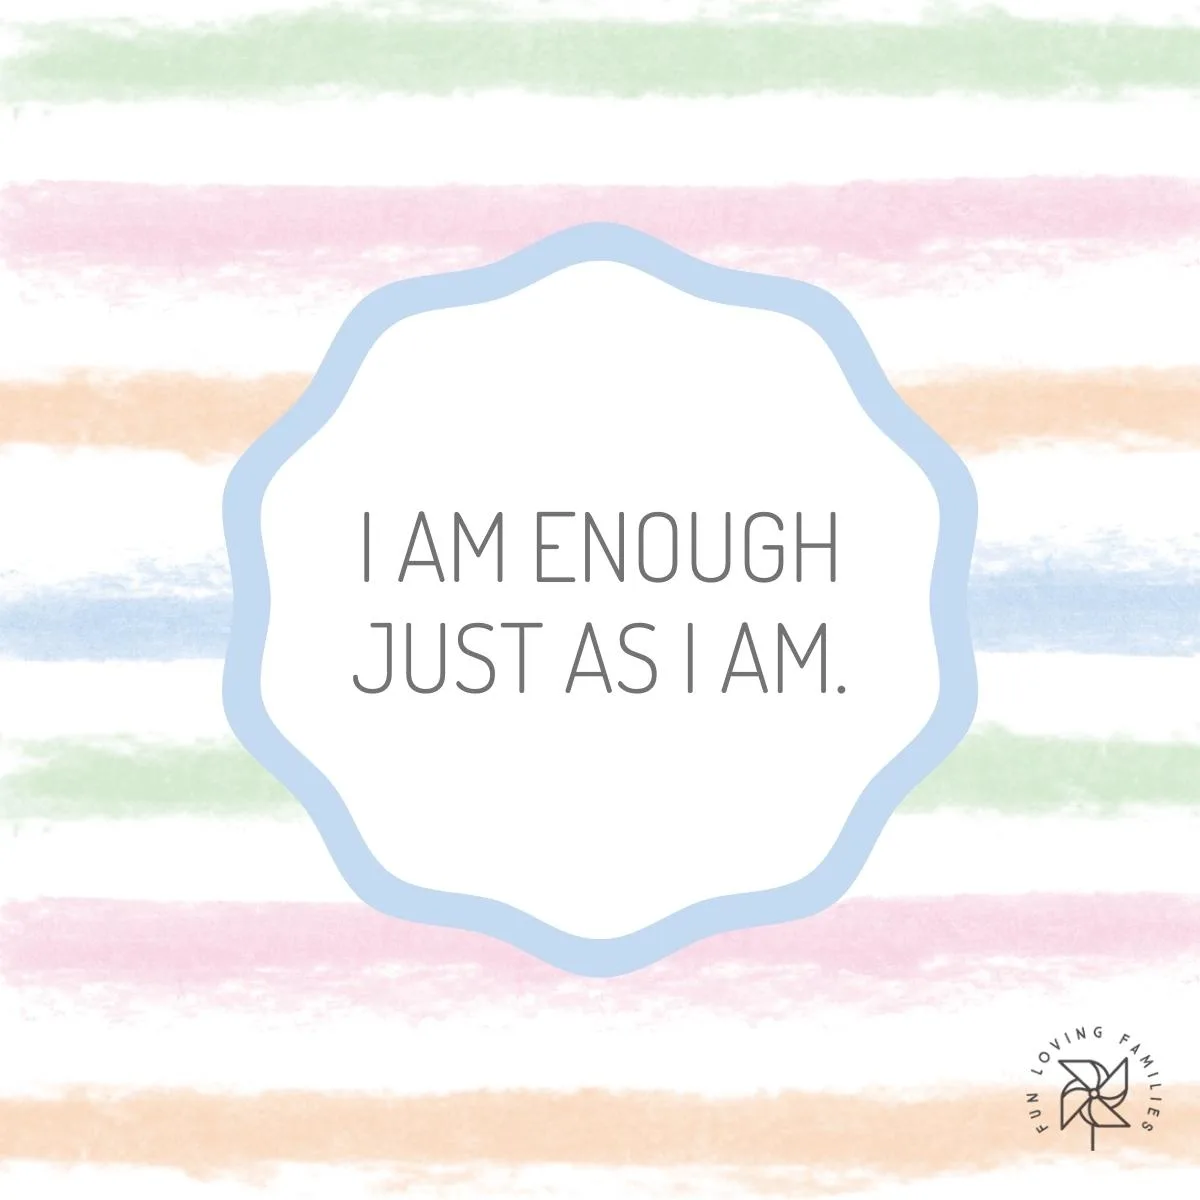 I am enough just as I am affirmation